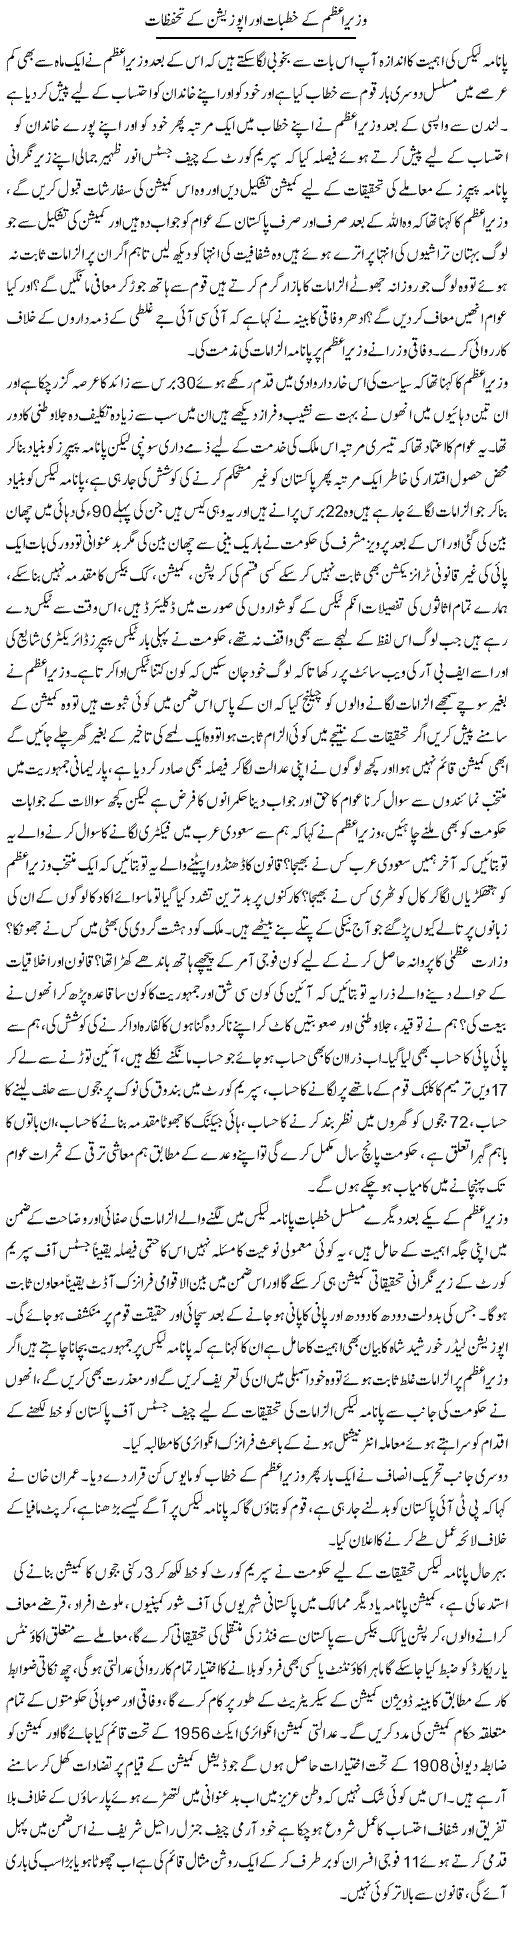 Wazeer e Azam Ke Khutbaat Aor Oposition Ke Tahaffuzat | Dr. Muhammad Tayyab Khan Singhanvi | Daily Urdu Columns